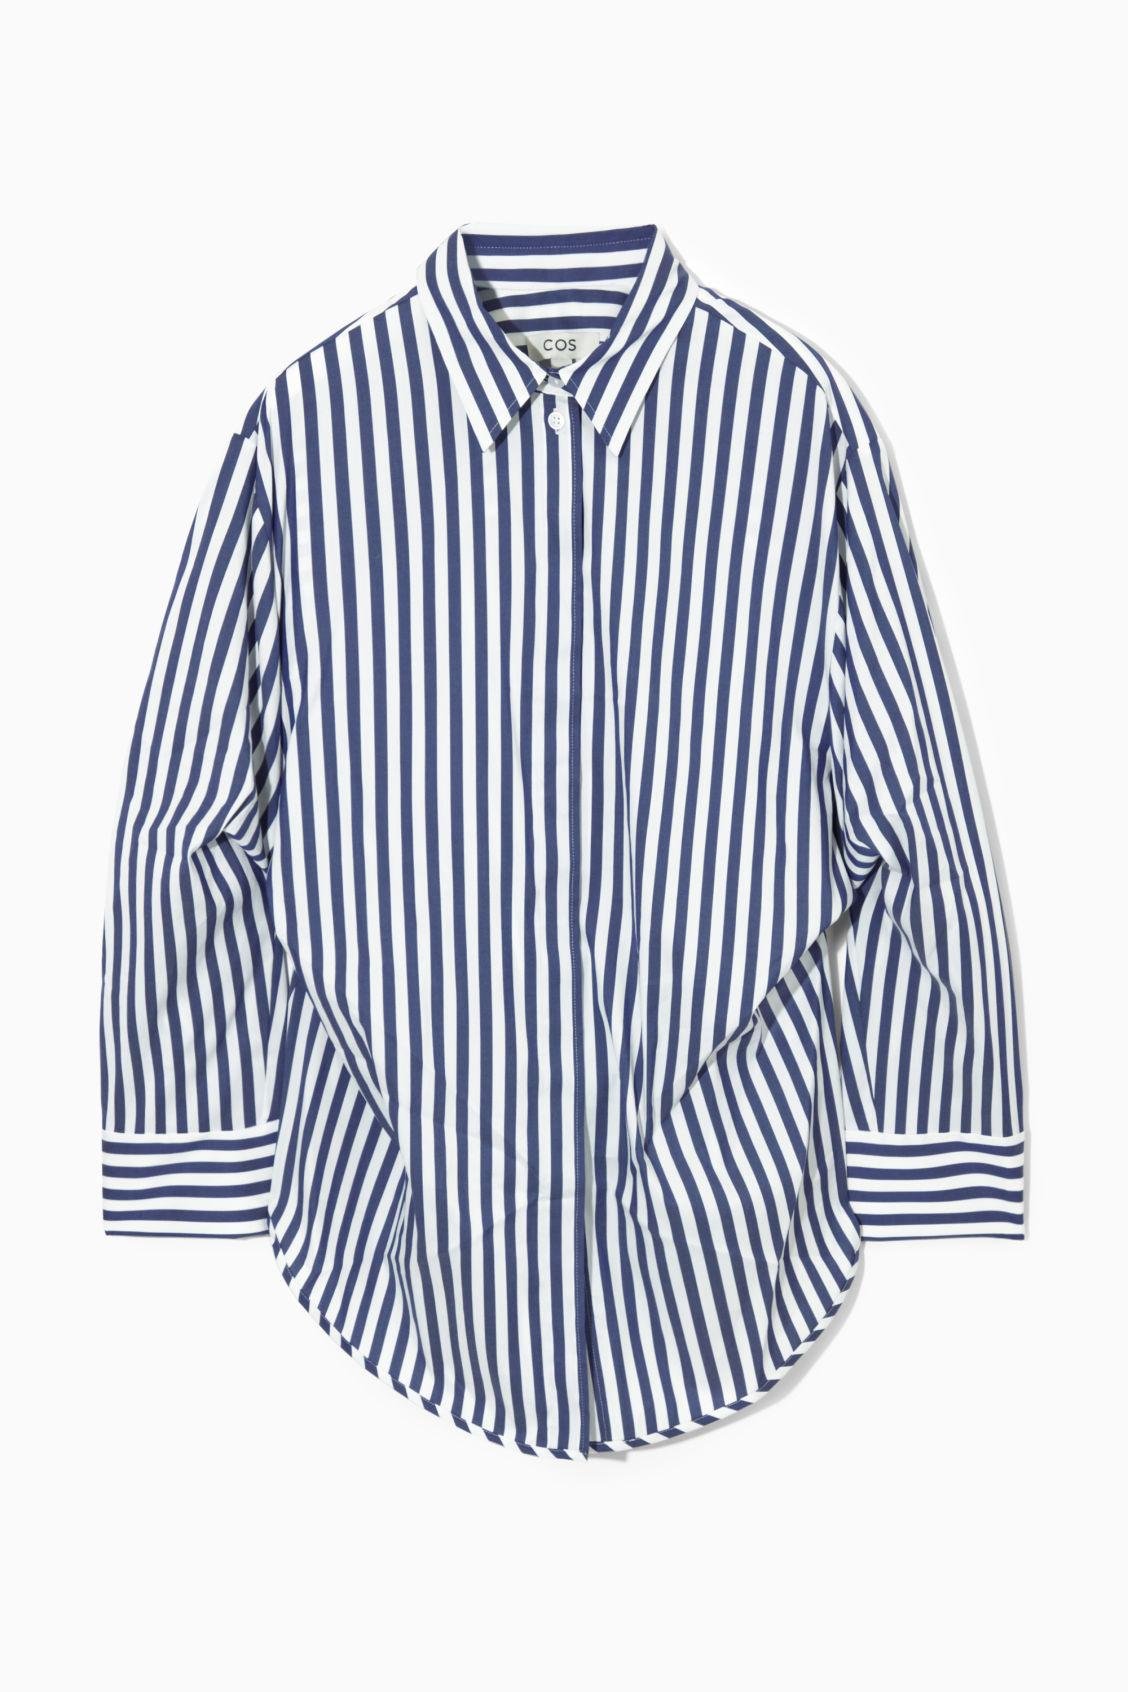 https://cdna.lystit.com/photos/cosstores/5eb91c9d/cos-Blue-Oversized-Waisted-Striped-Shirt.jpeg